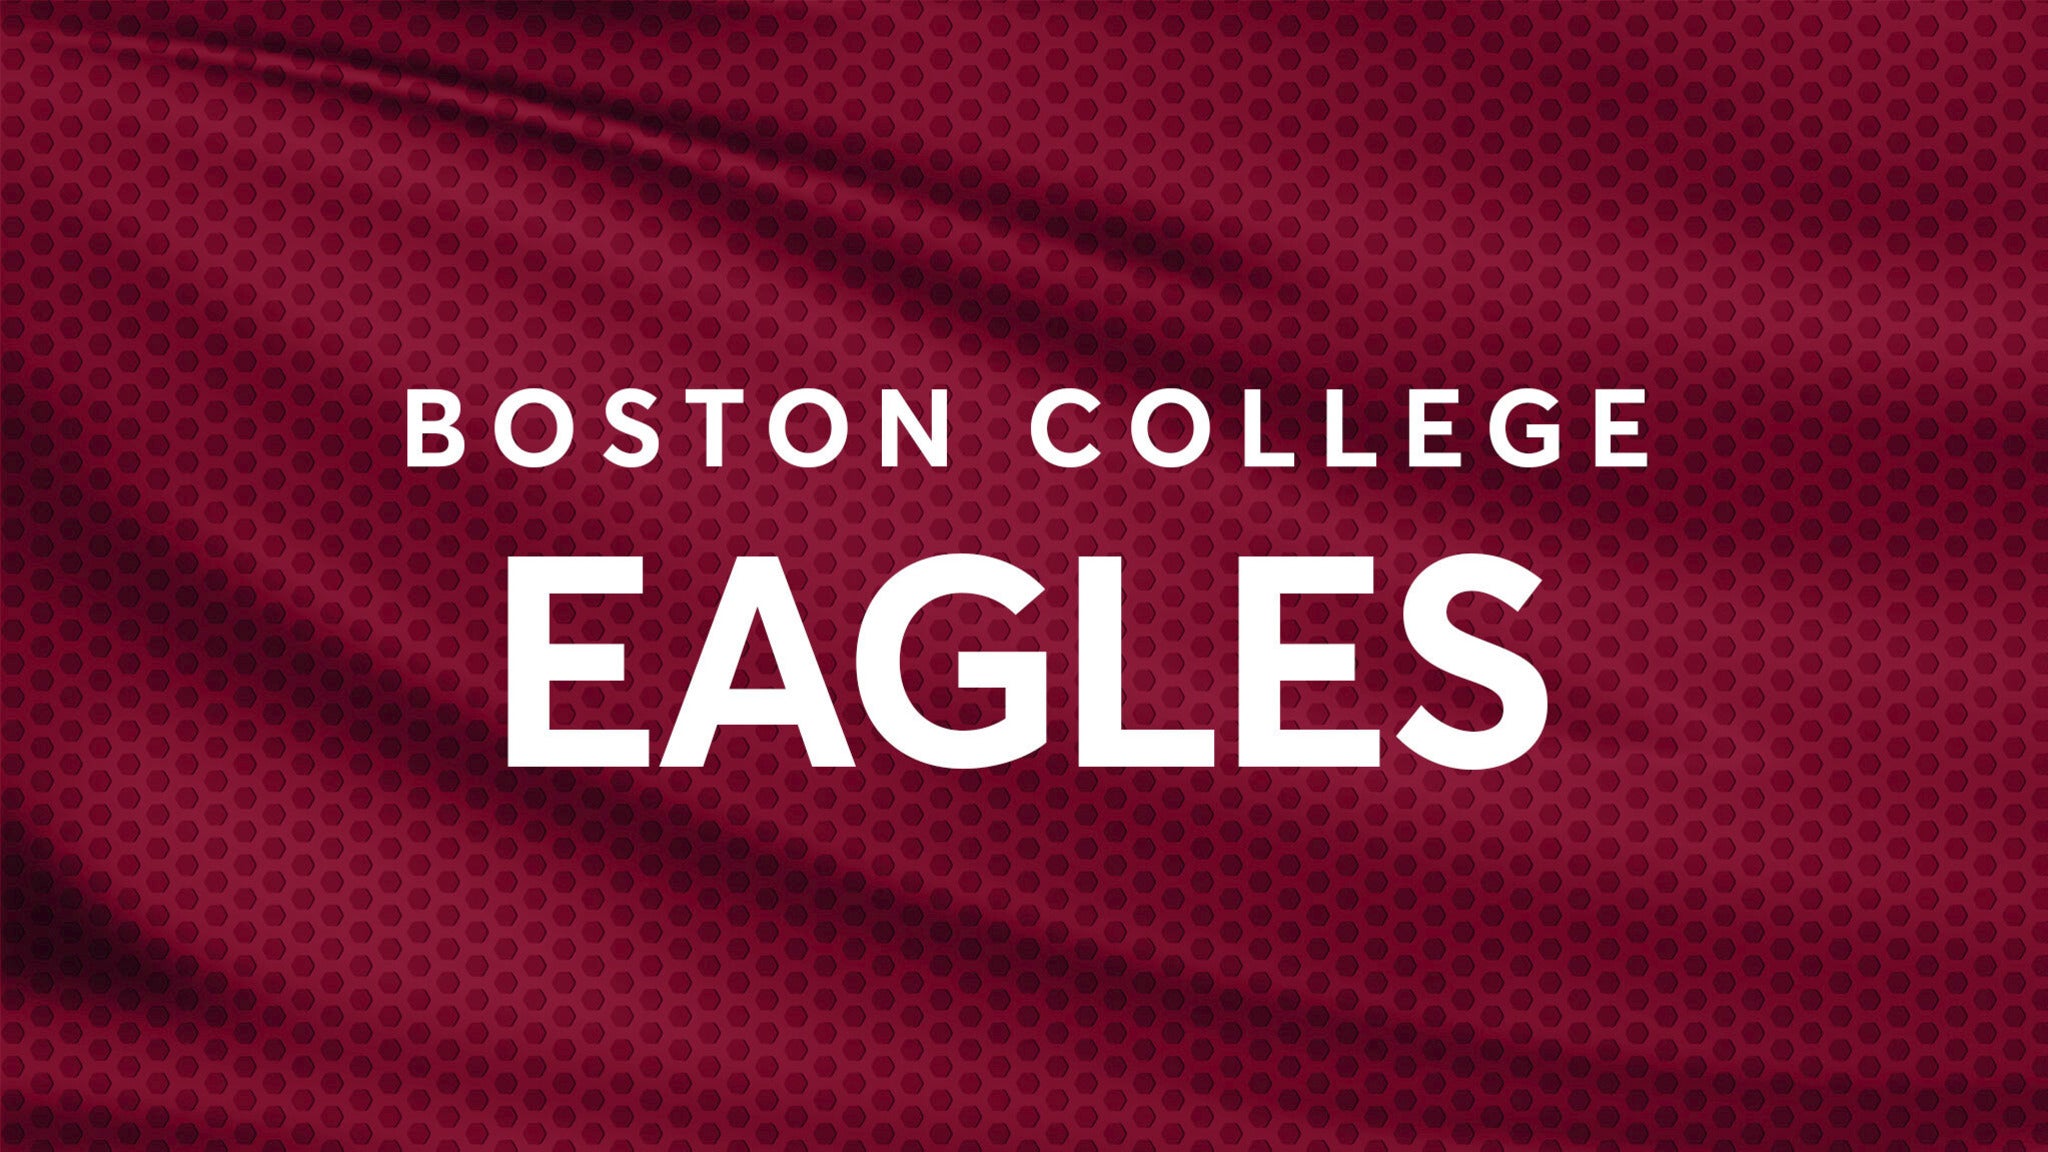 Boston College Eagles Football vs. Clemson Tigers Football